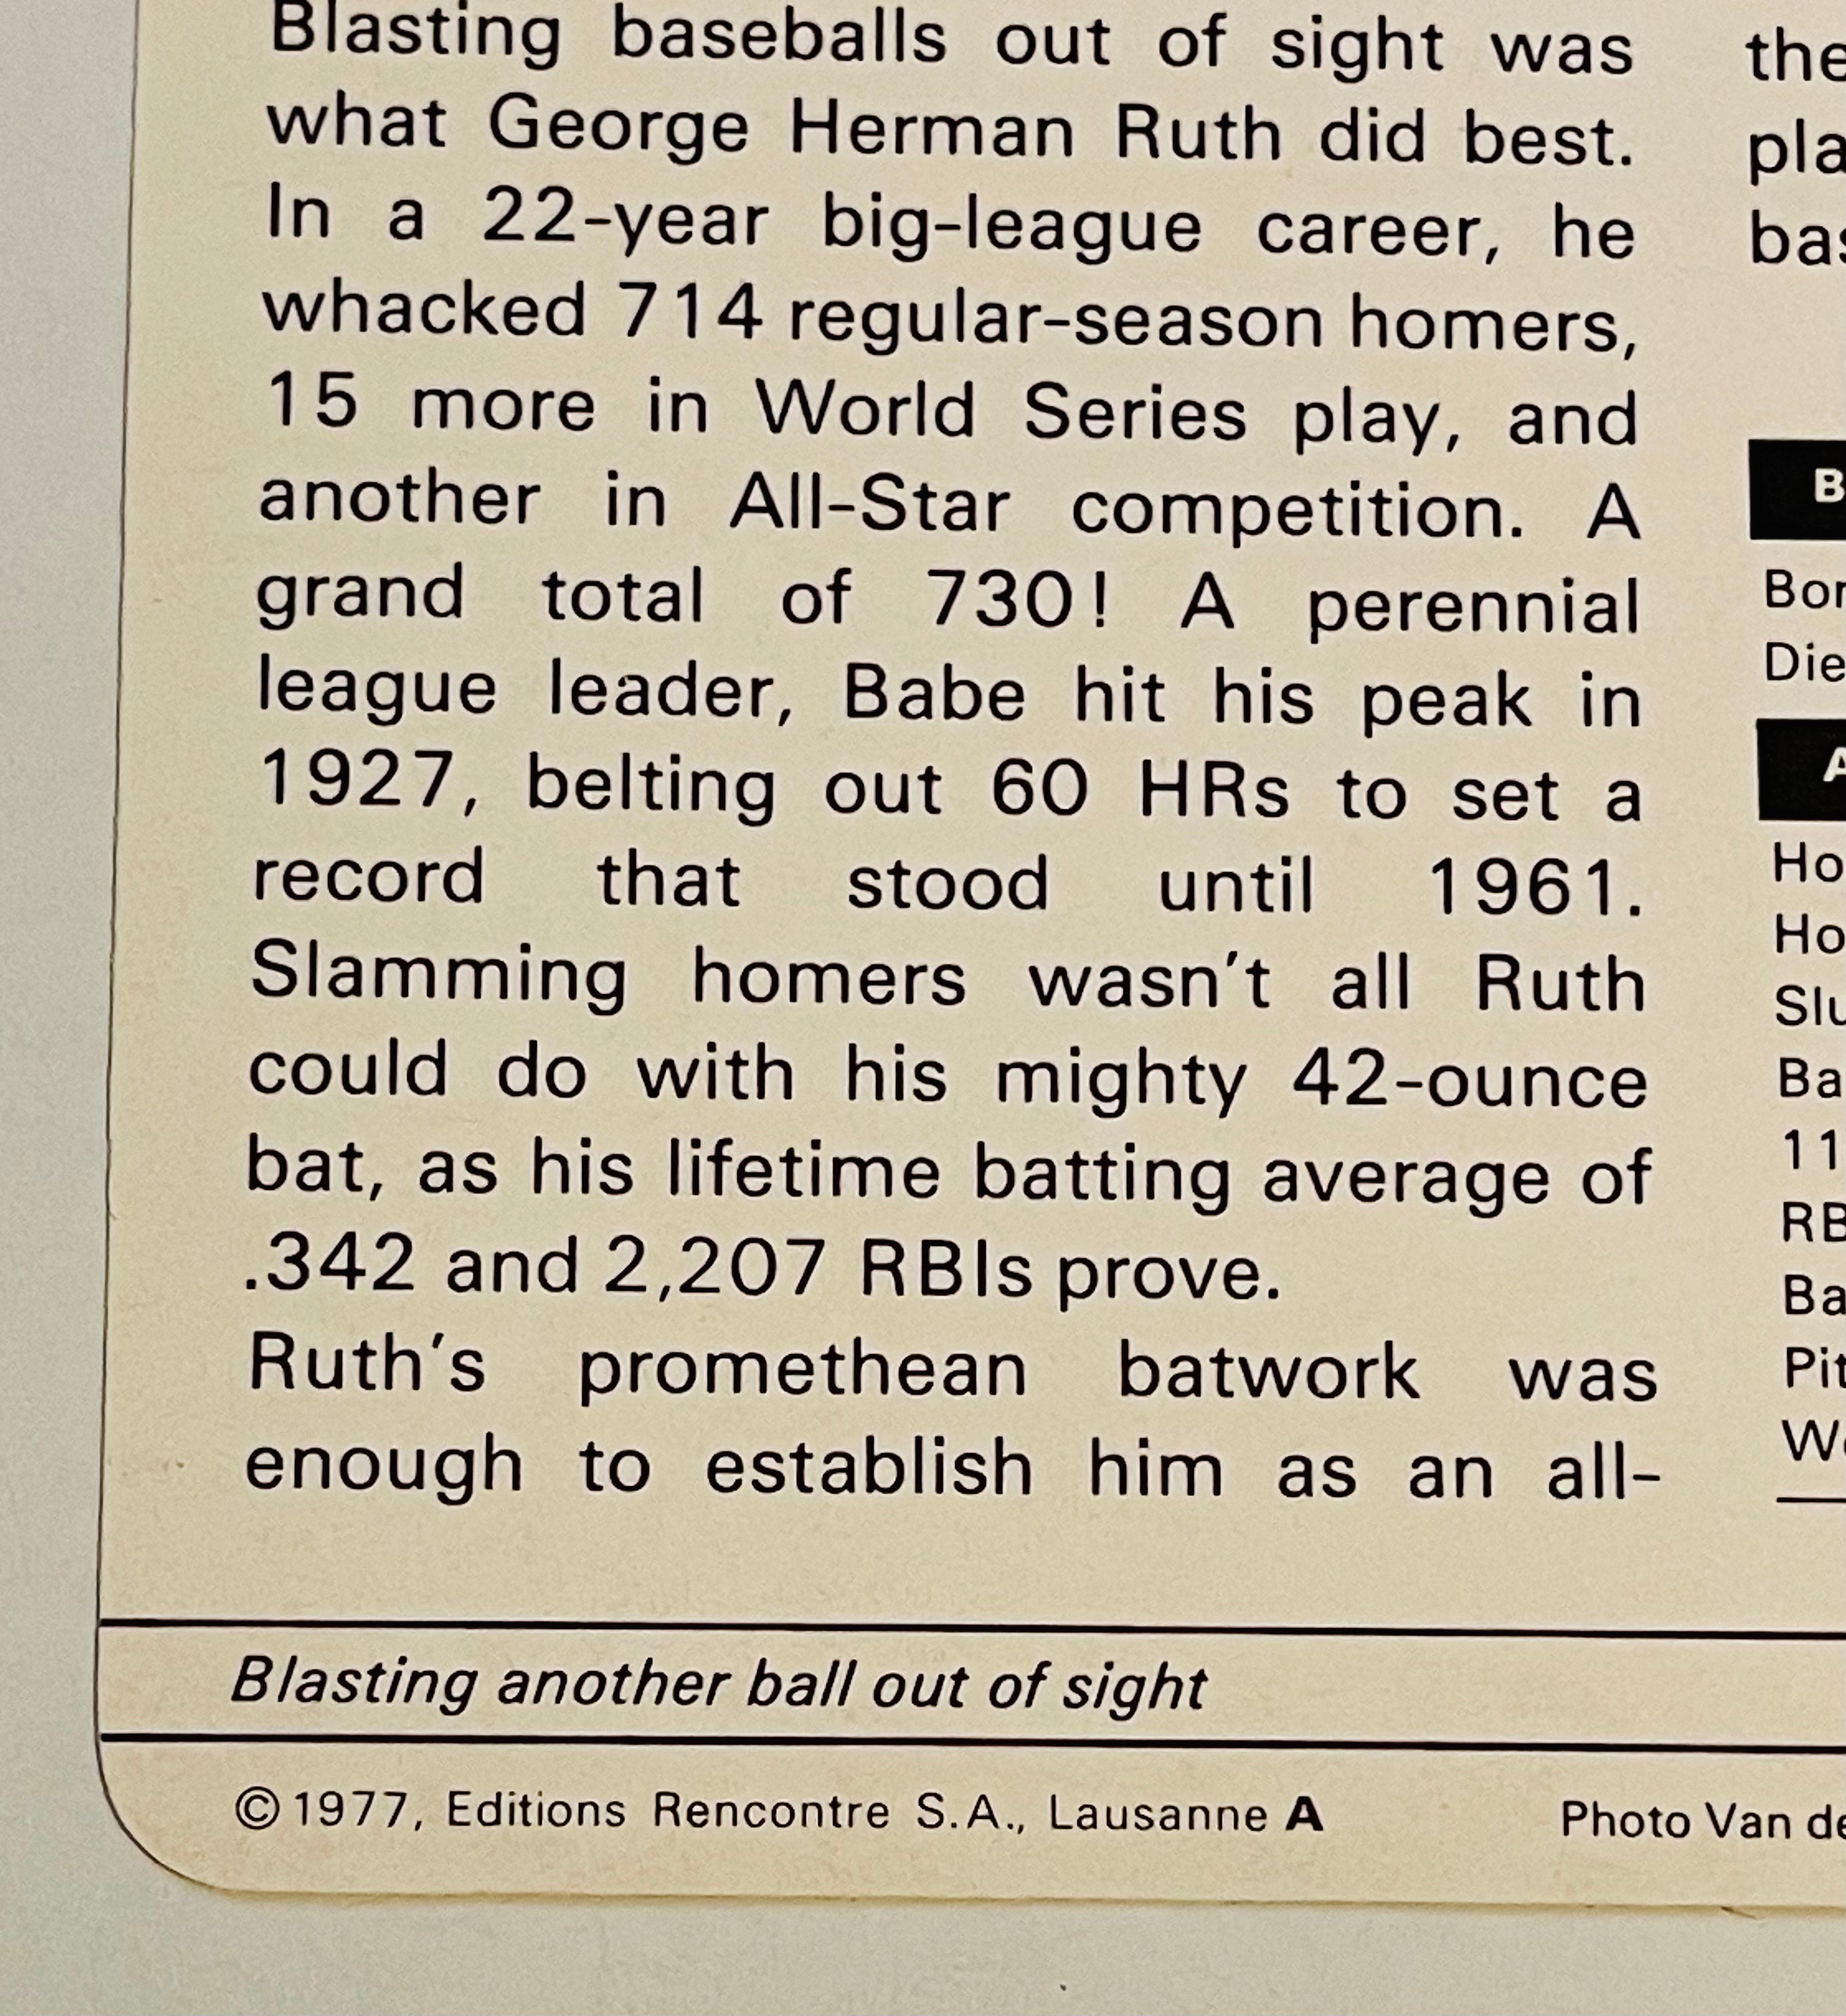 Babe Ruth 5x7 baseball card from Italy 1977